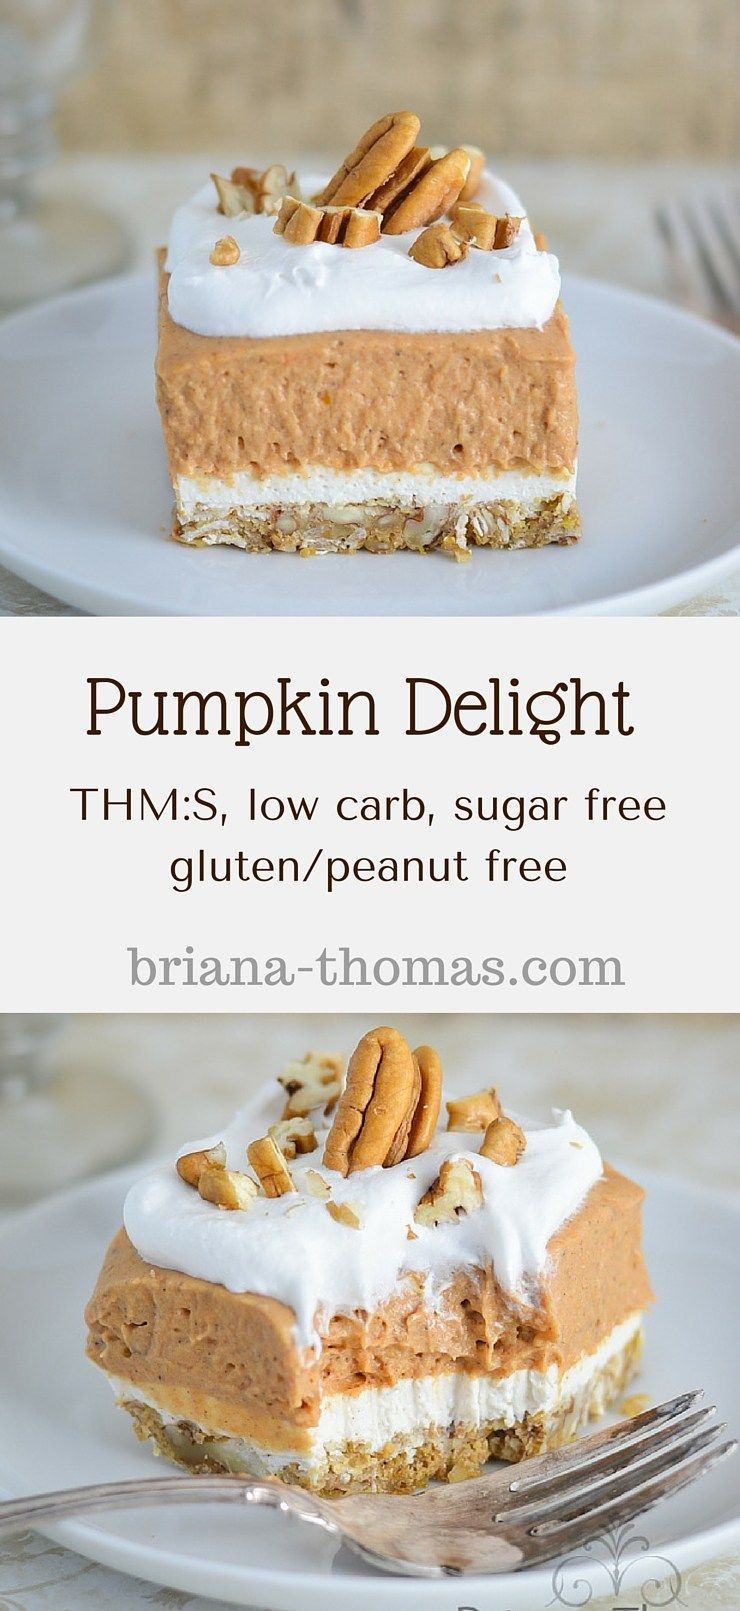 Gluten Free Pumpkin Desserts
 Pumpkin Delight Recipe